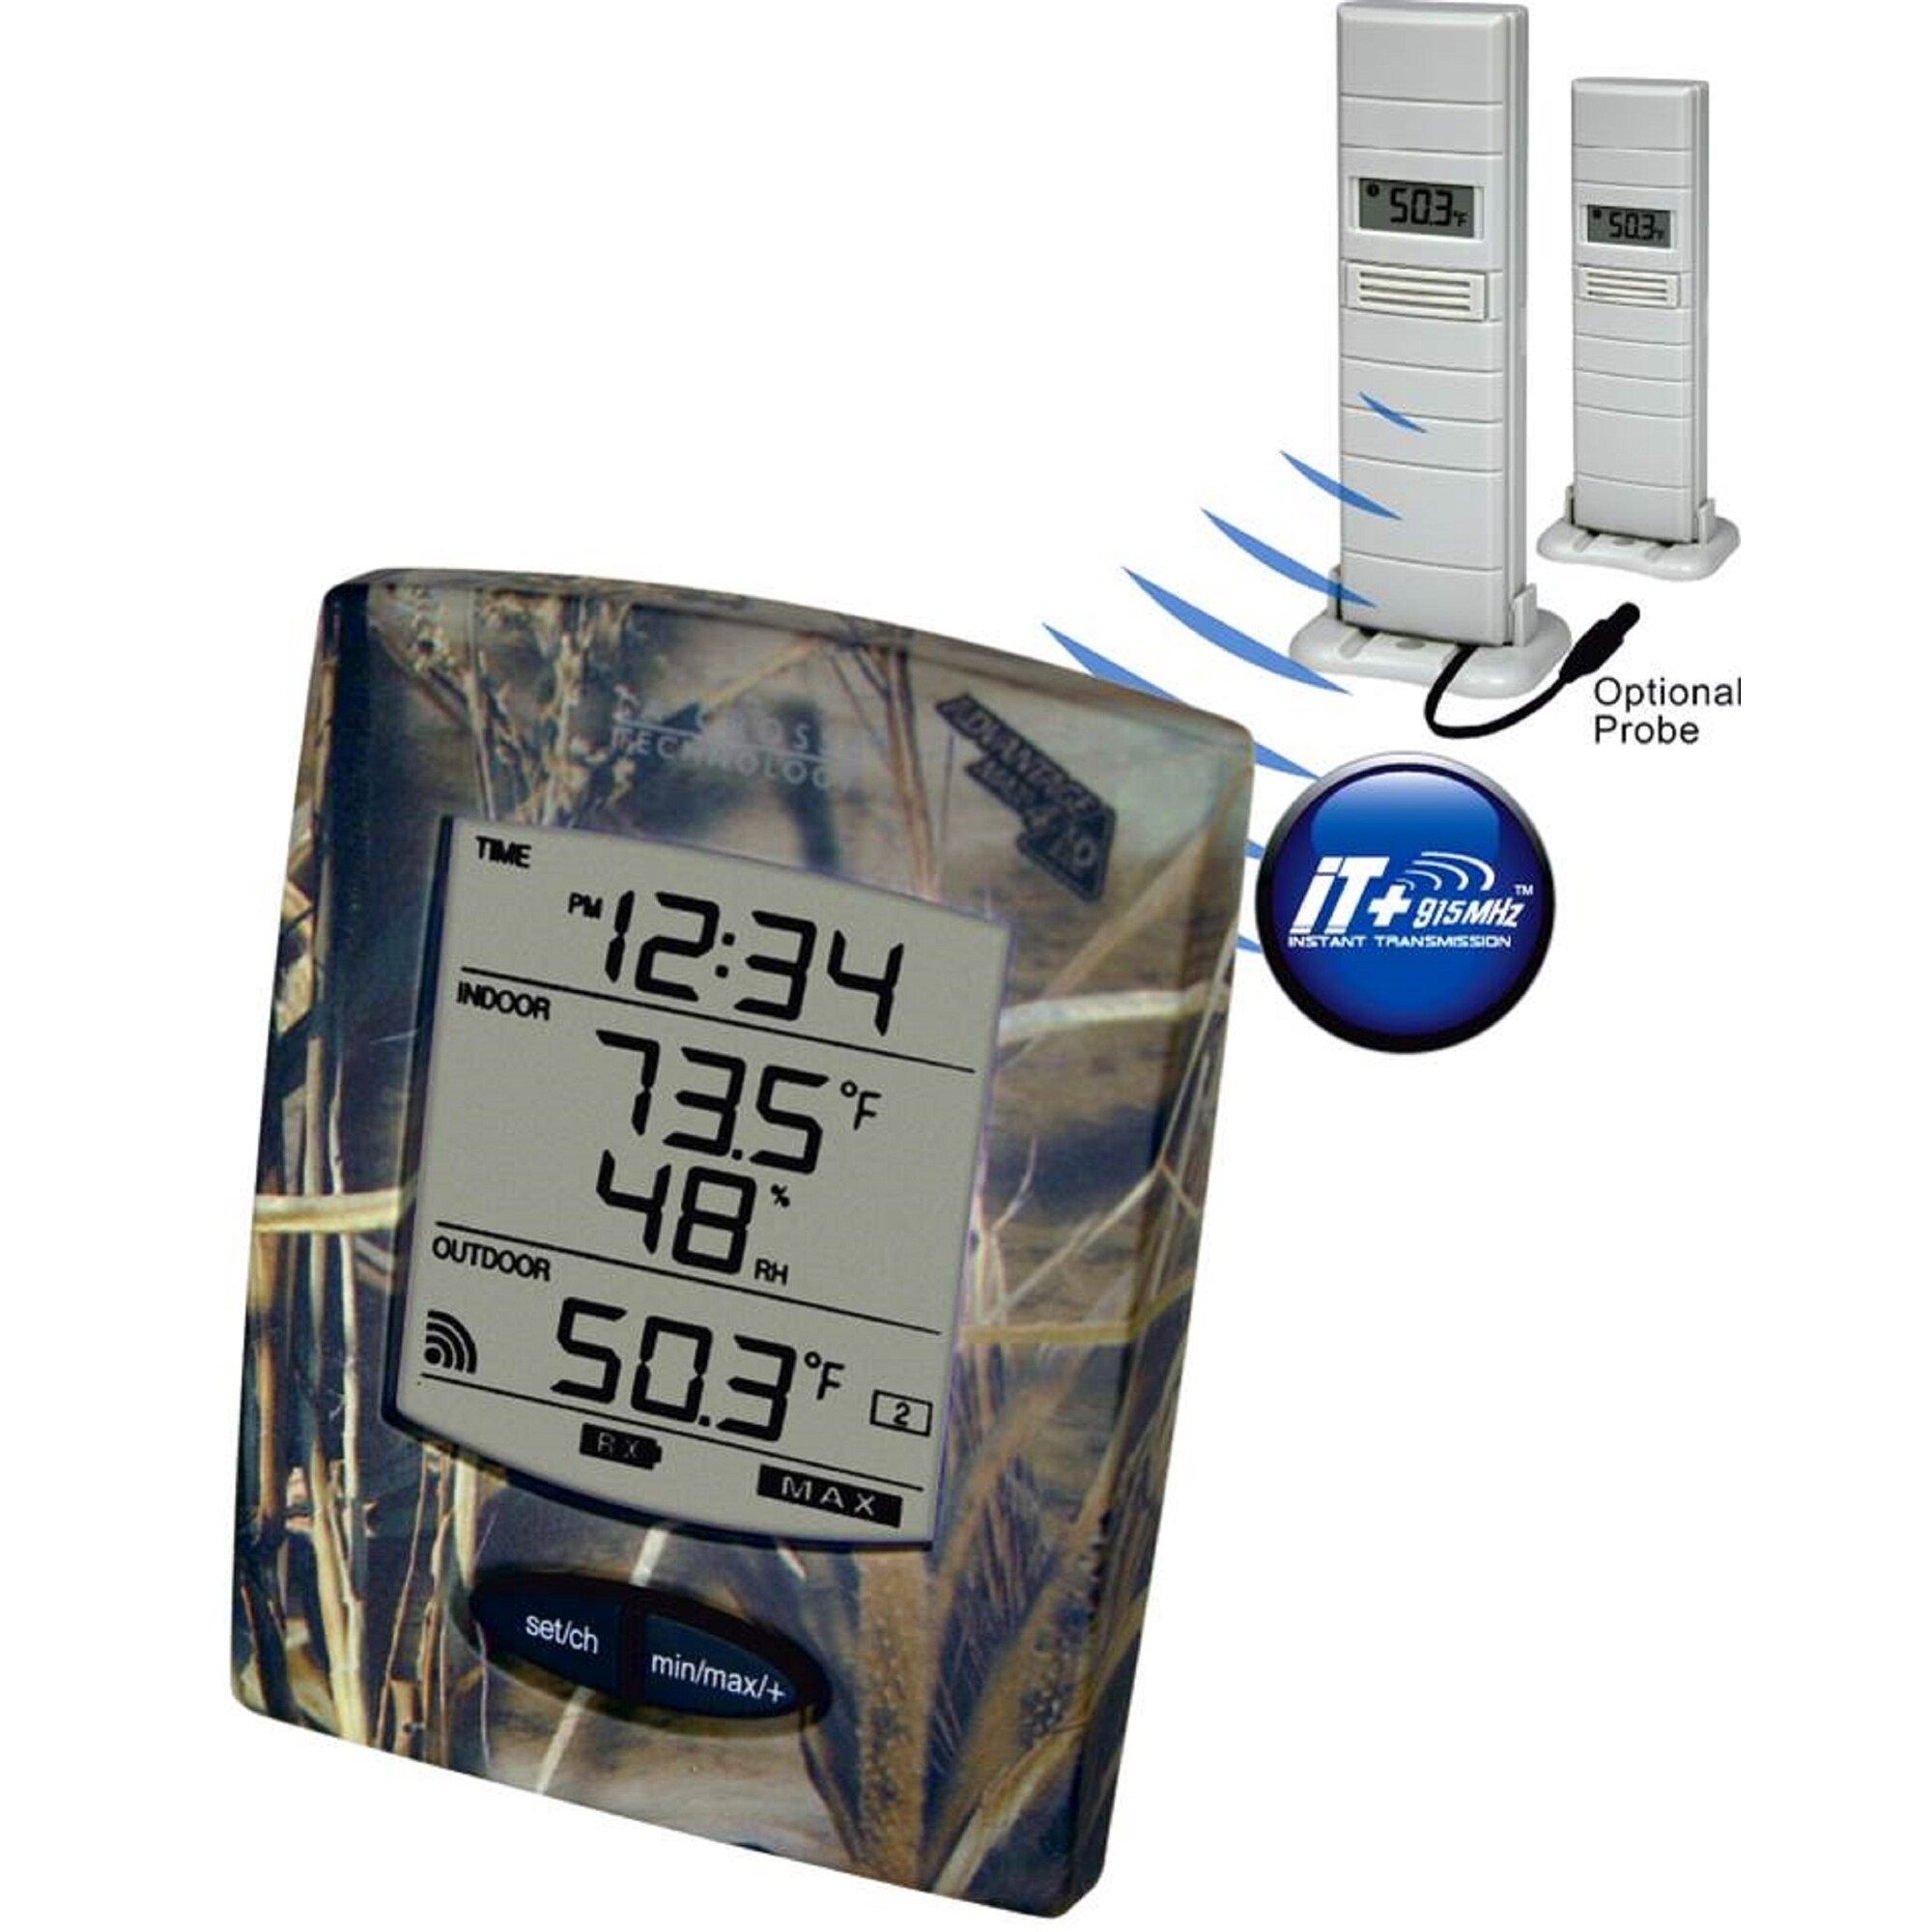 La Crosse Technology WS-9029U Wireless Weather Station with Digital Time,  Model: WS-9029U-IT-CBP, Home/Garden & Outdoor Store